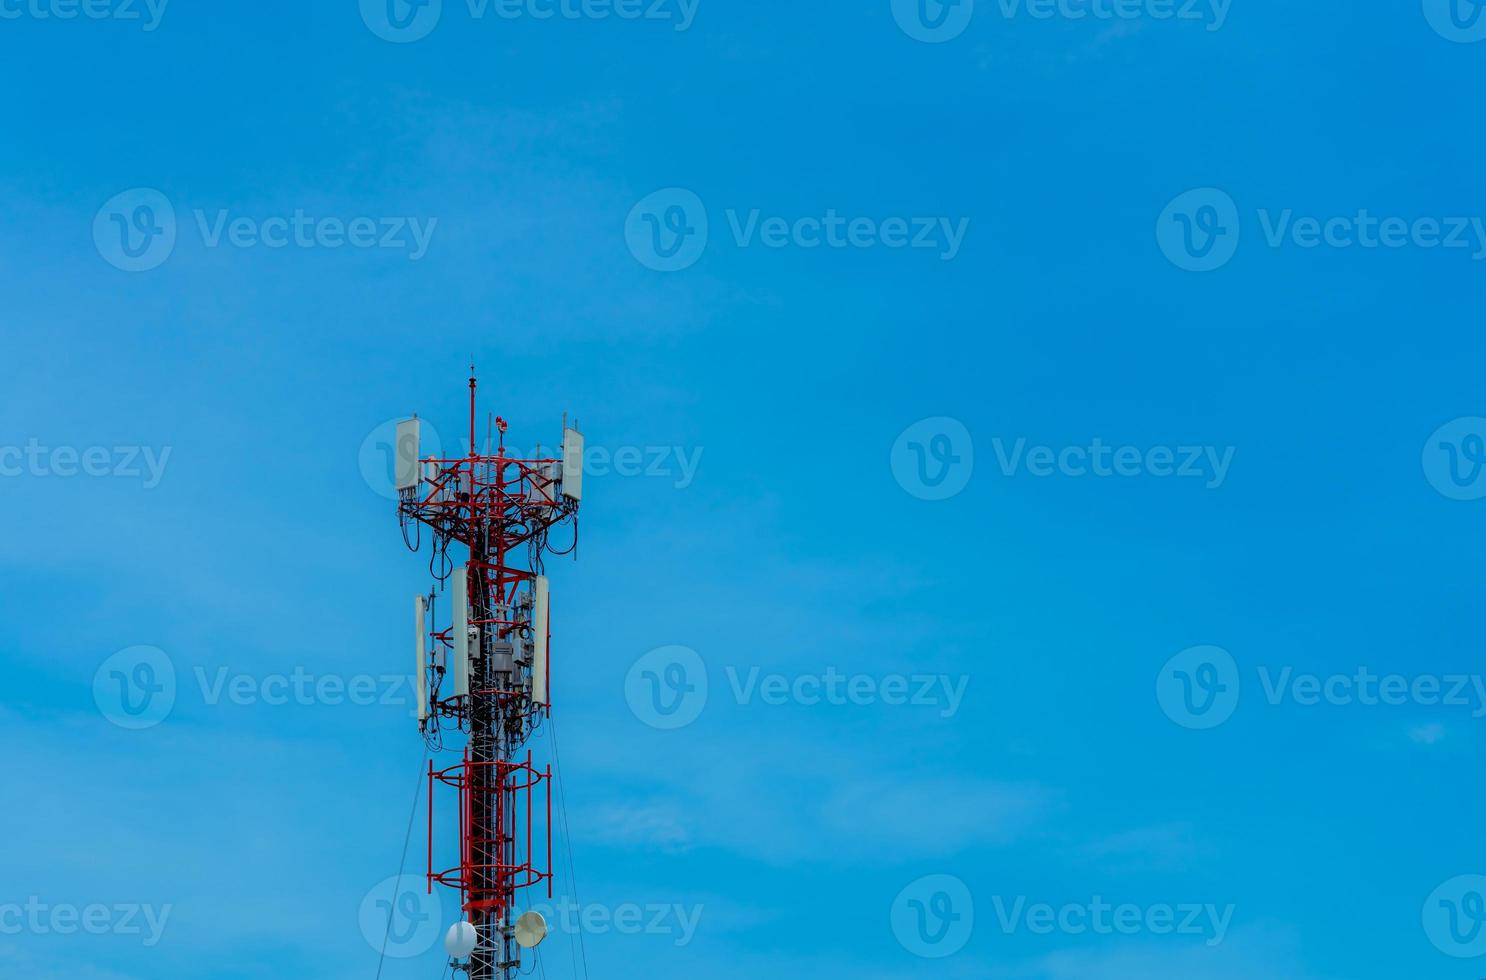 telecommunicatietoren met duidelijke blauwe hemelachtergrond. antenne op blauwe hemel. radio- en satellietpaal. communicatietechnologie. telecommunicatie-industrie. mobiel of telecom 4g-netwerk. technologie foto